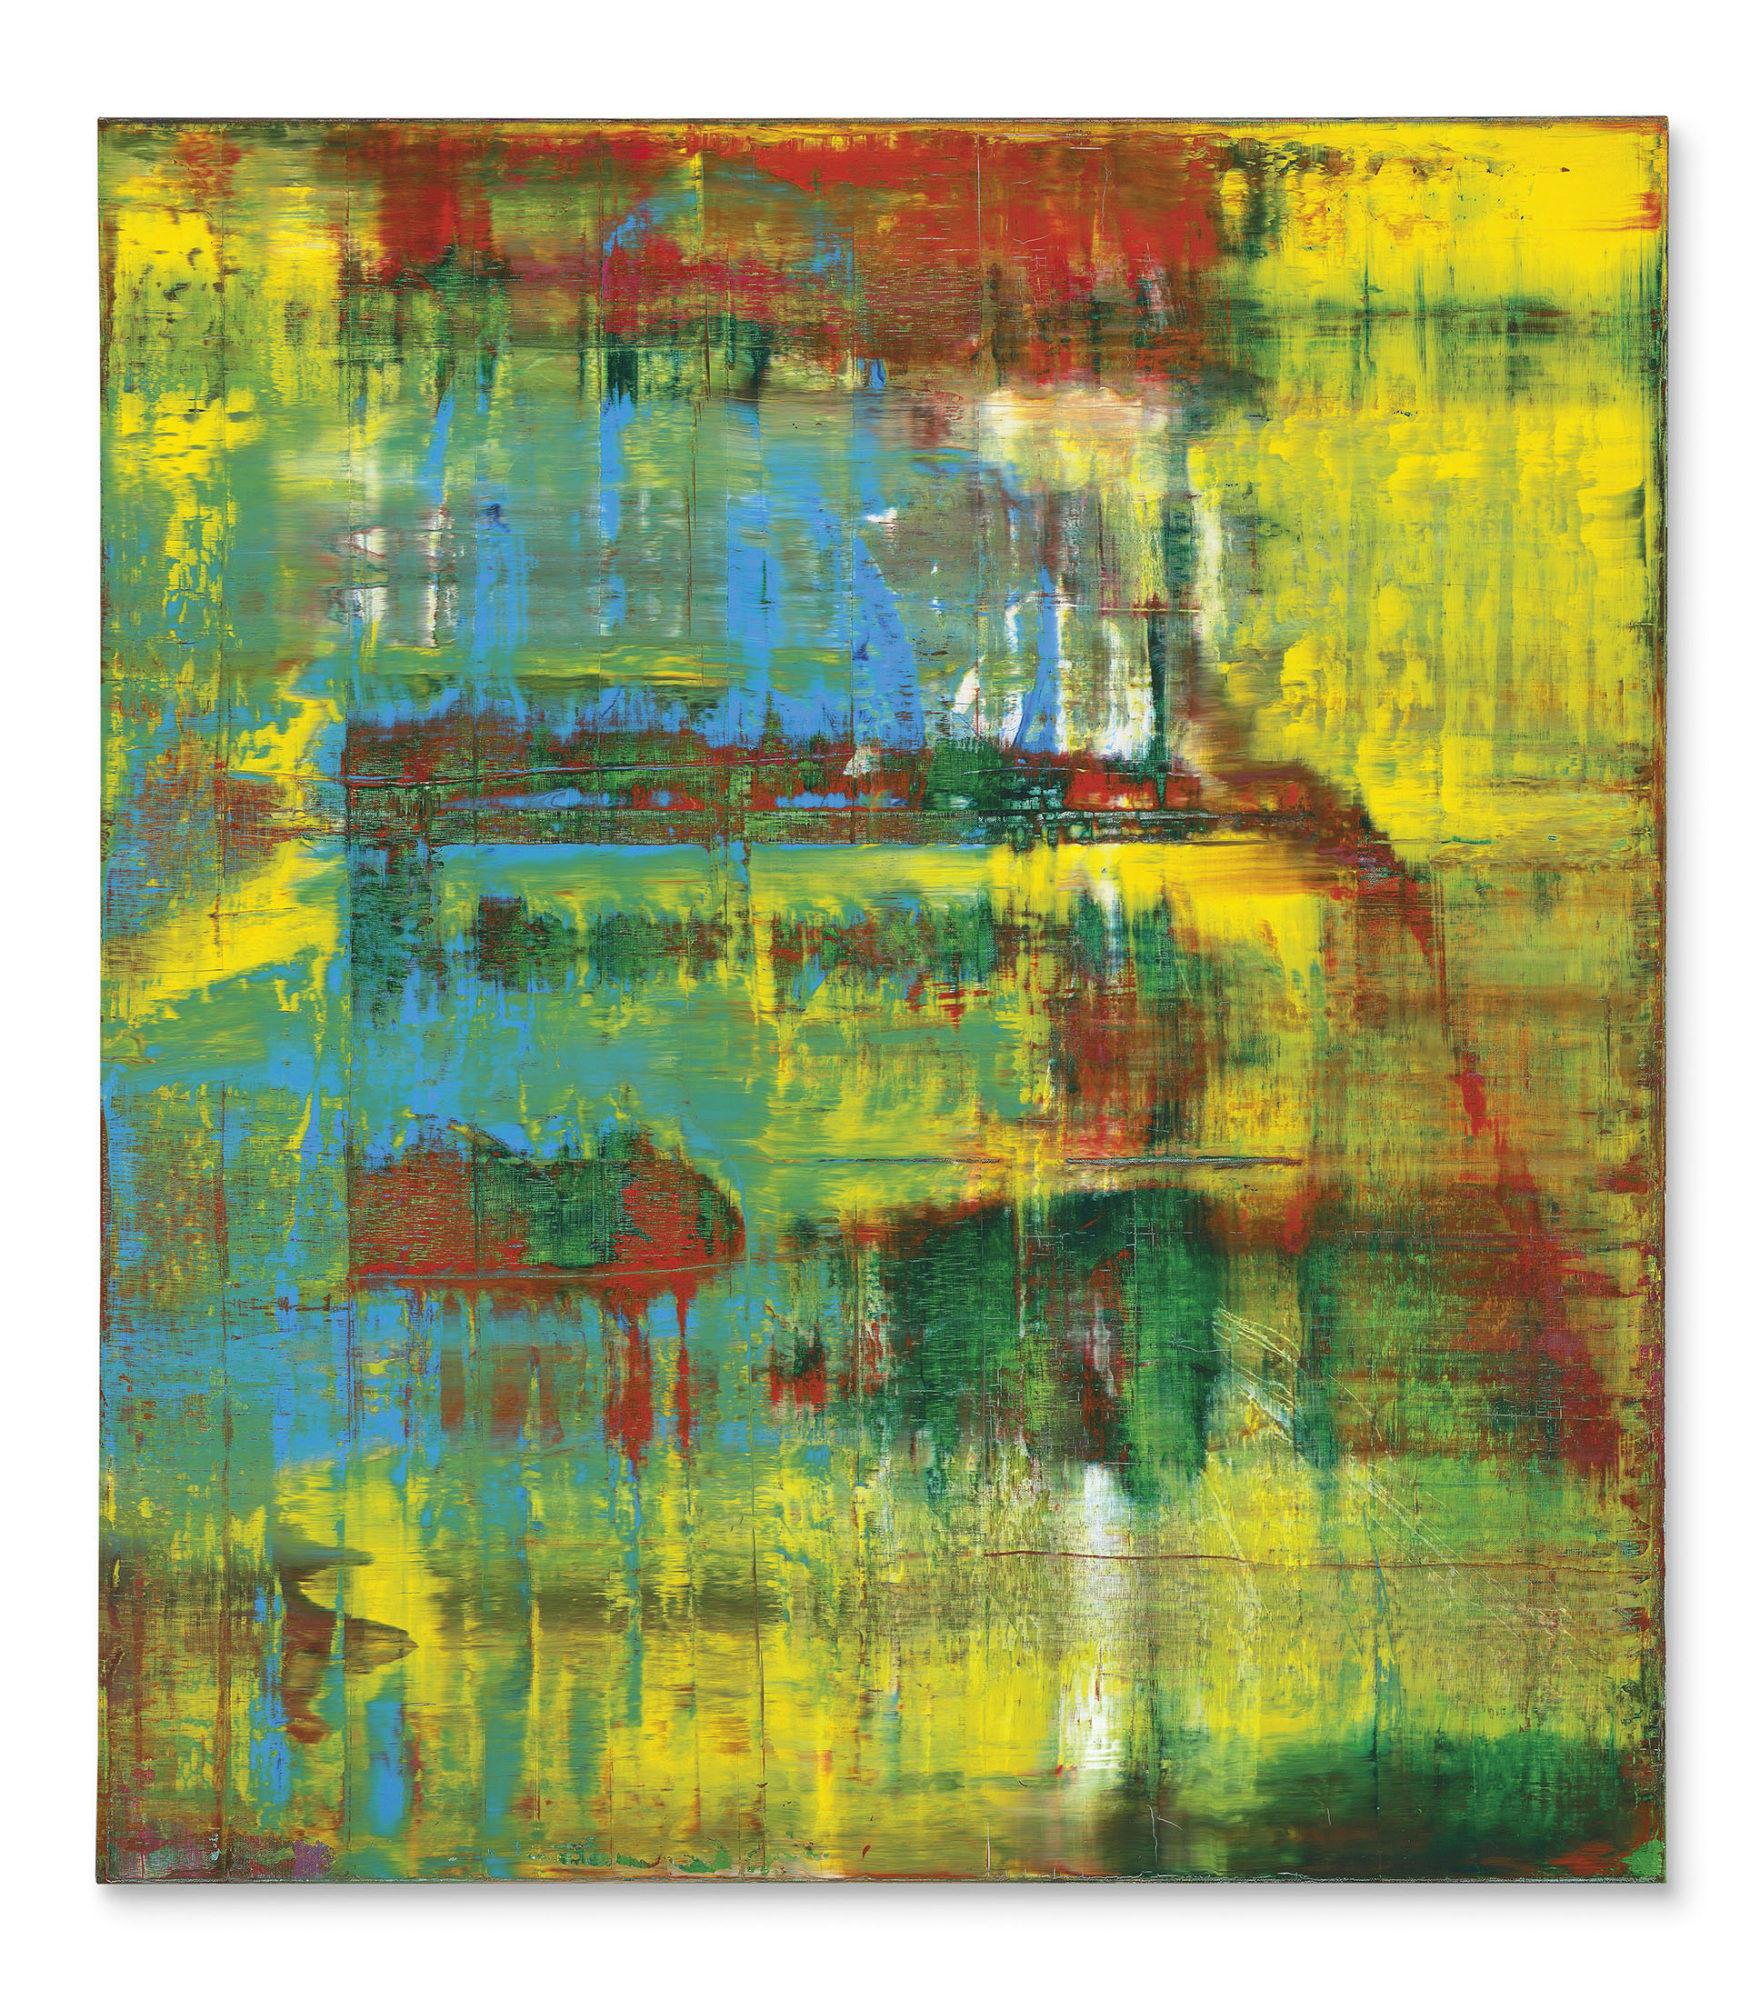 Gerhard Richter's Abstraktes Bild (809-2)